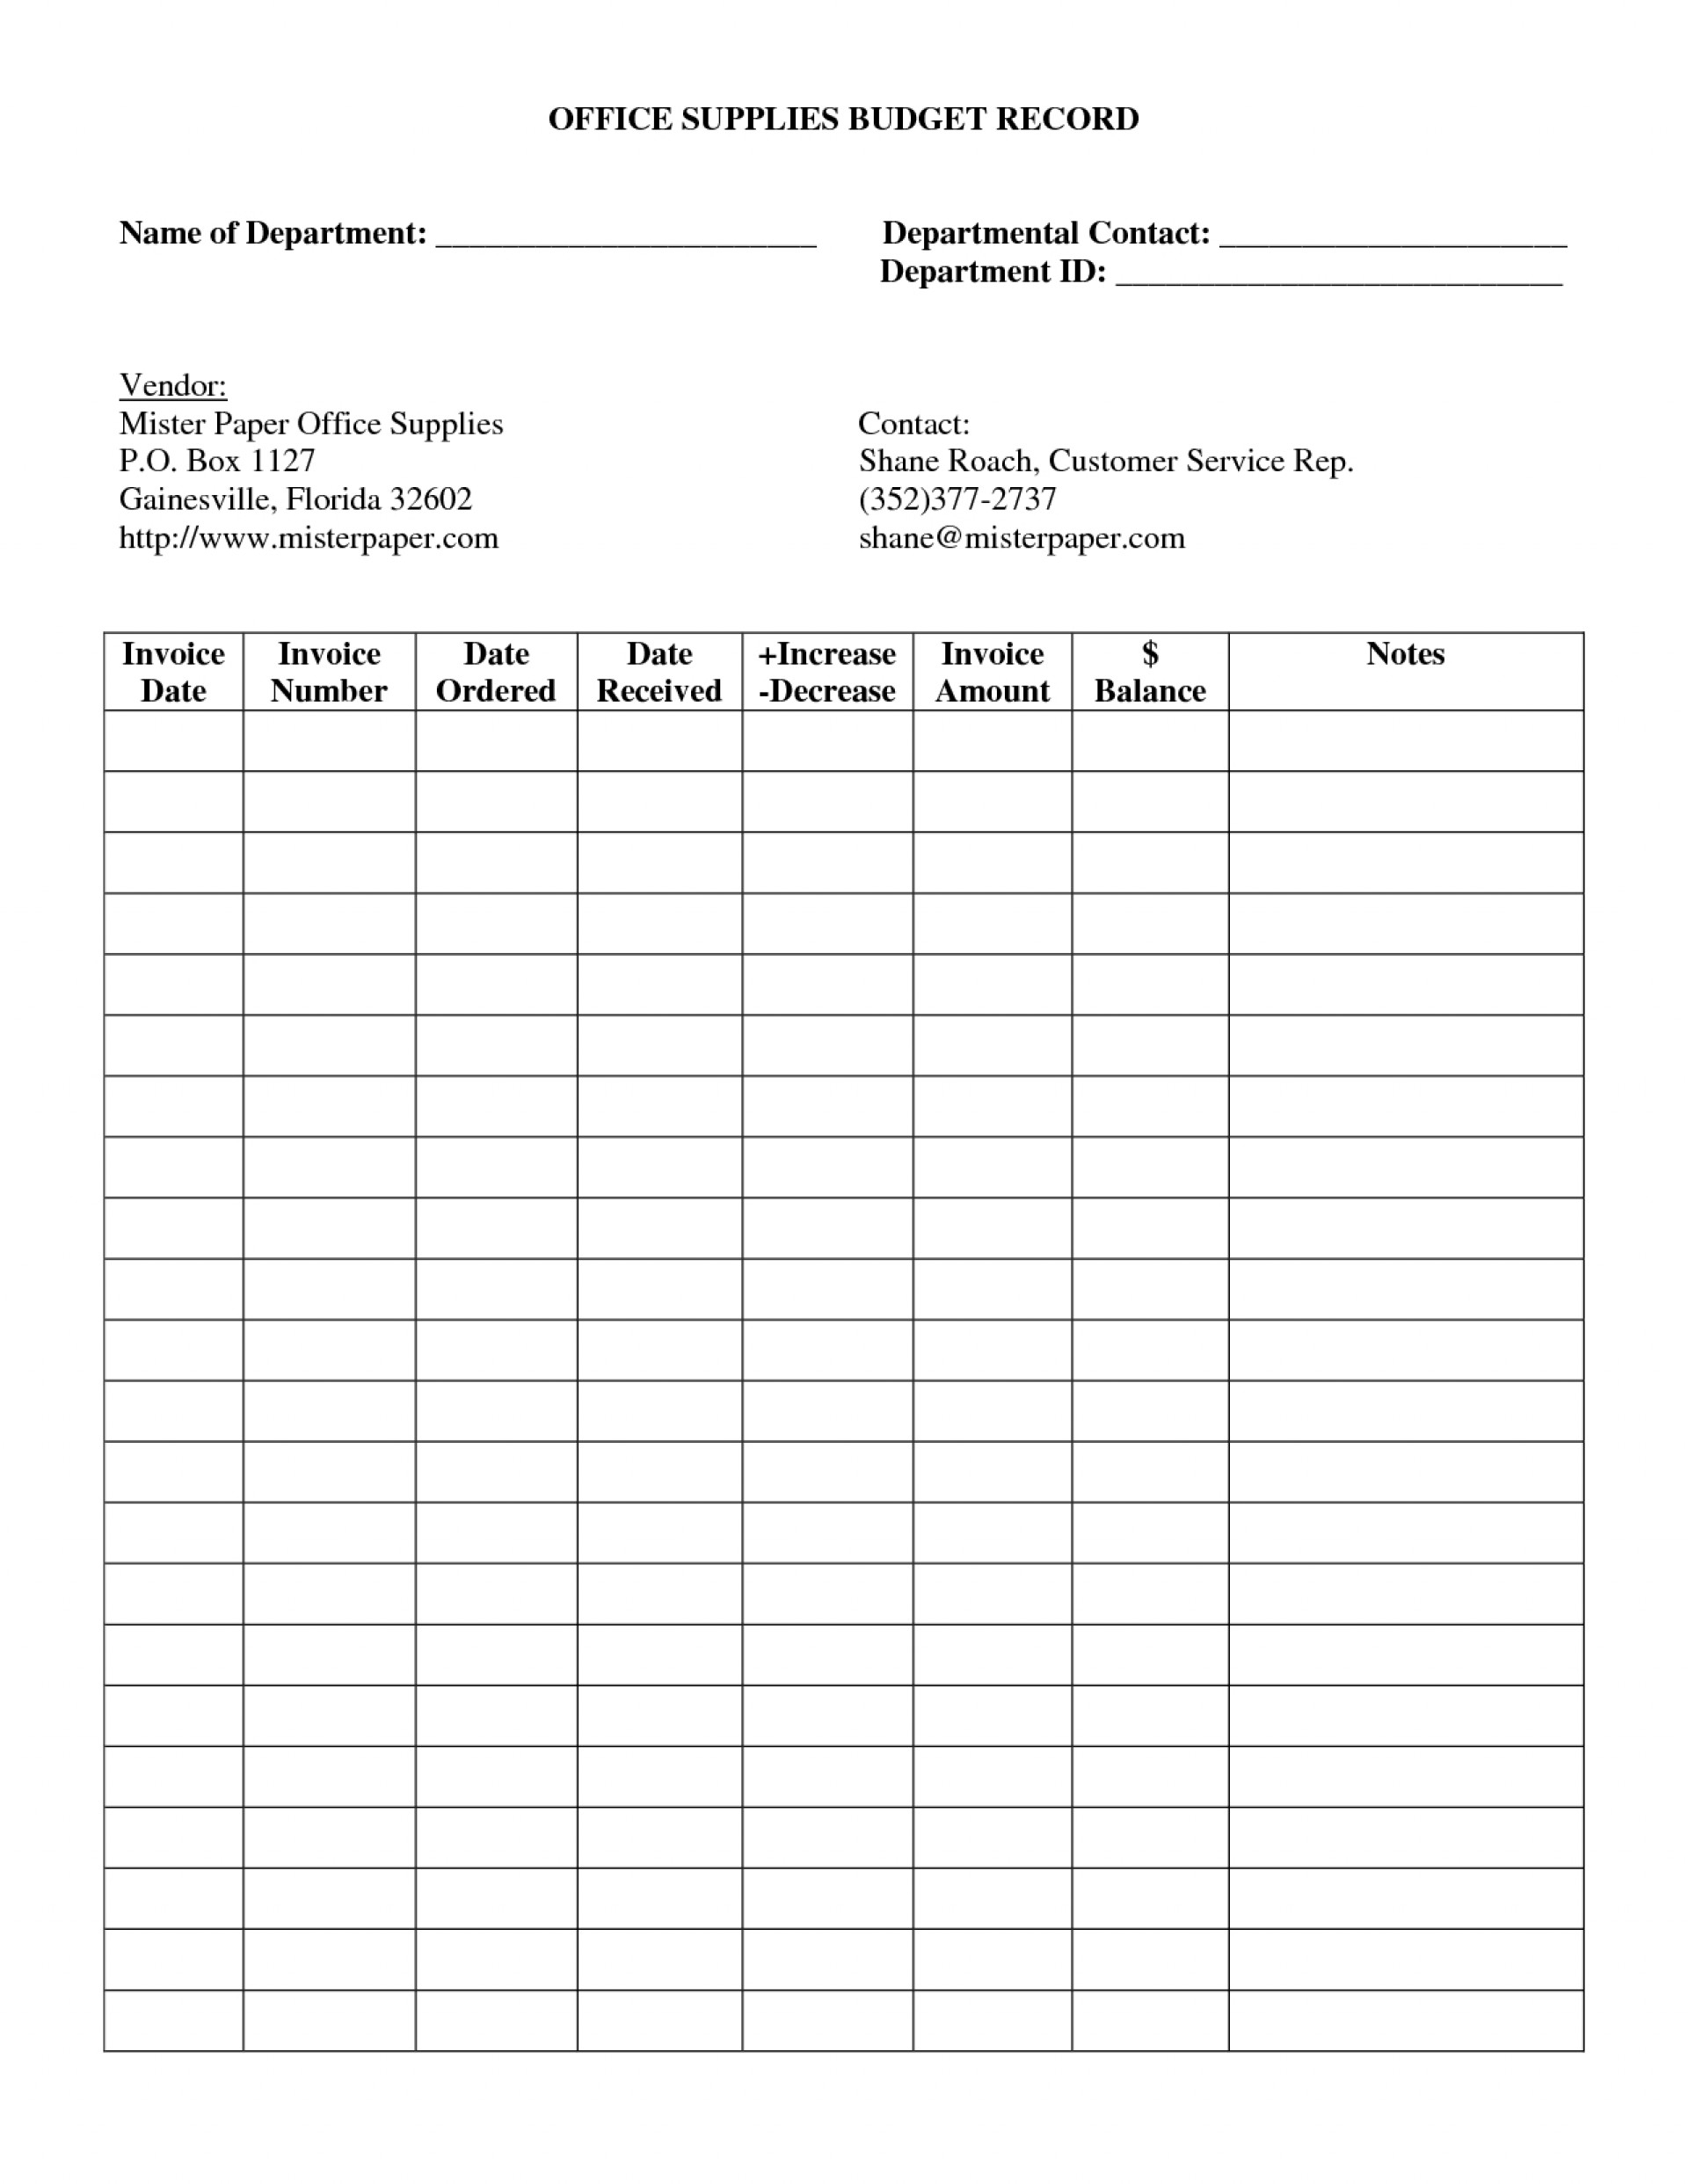 office-supply-inventory-spreadsheet-regarding-016-supply-order-template